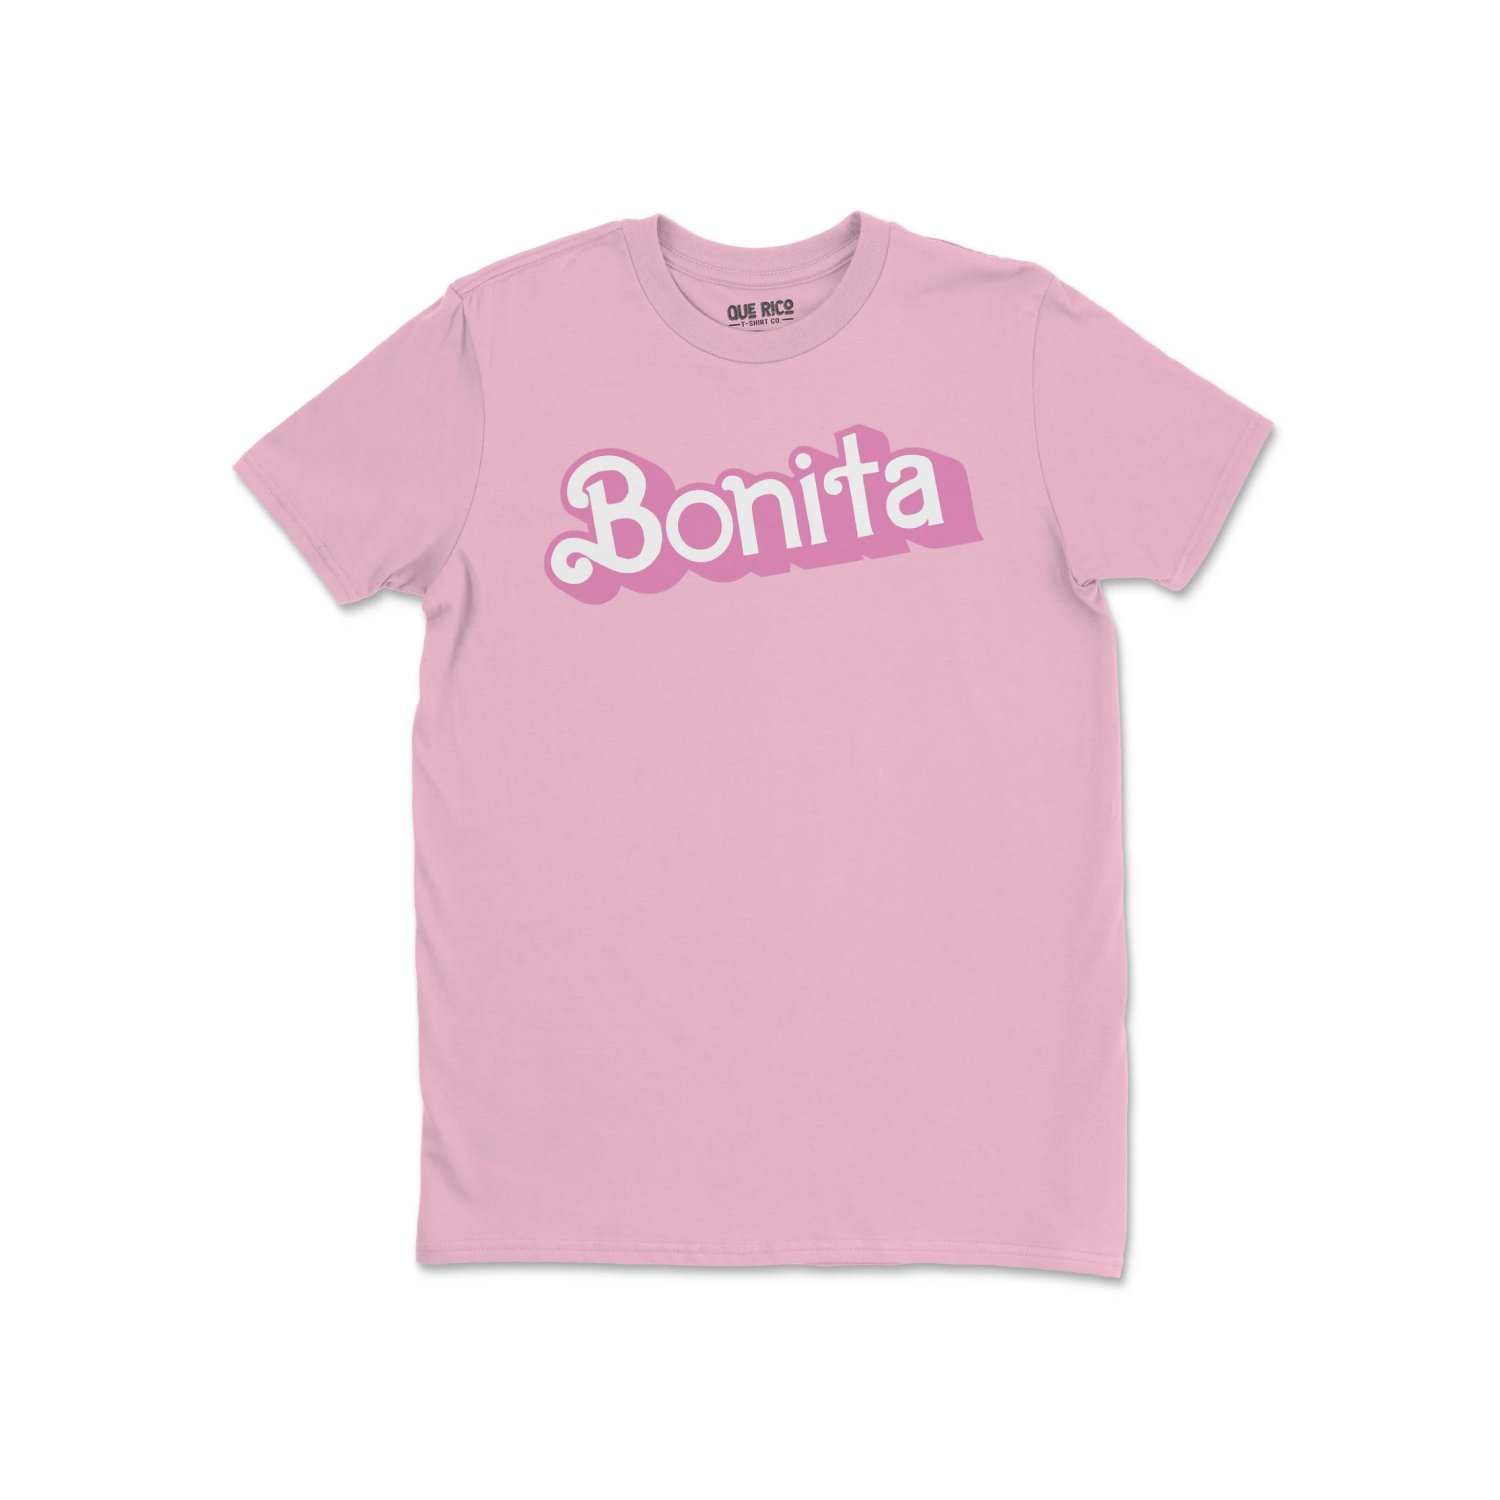 Las Ofrendas-Bonita T Shirt-Famm.jpg